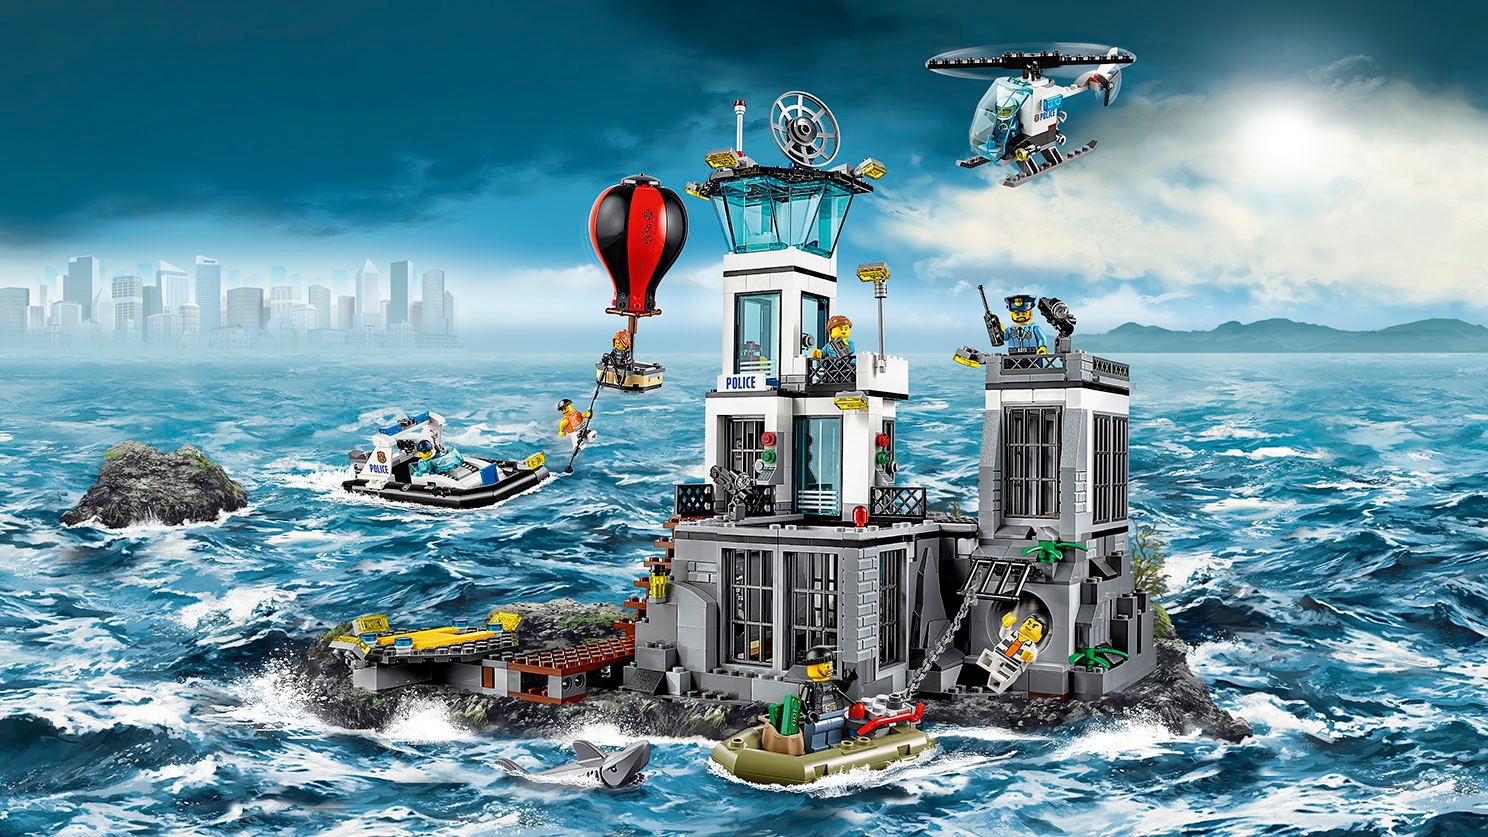 Monarch buffet Mitt Prison Island 60130 - LEGO® City Sets - LEGO.com for kids